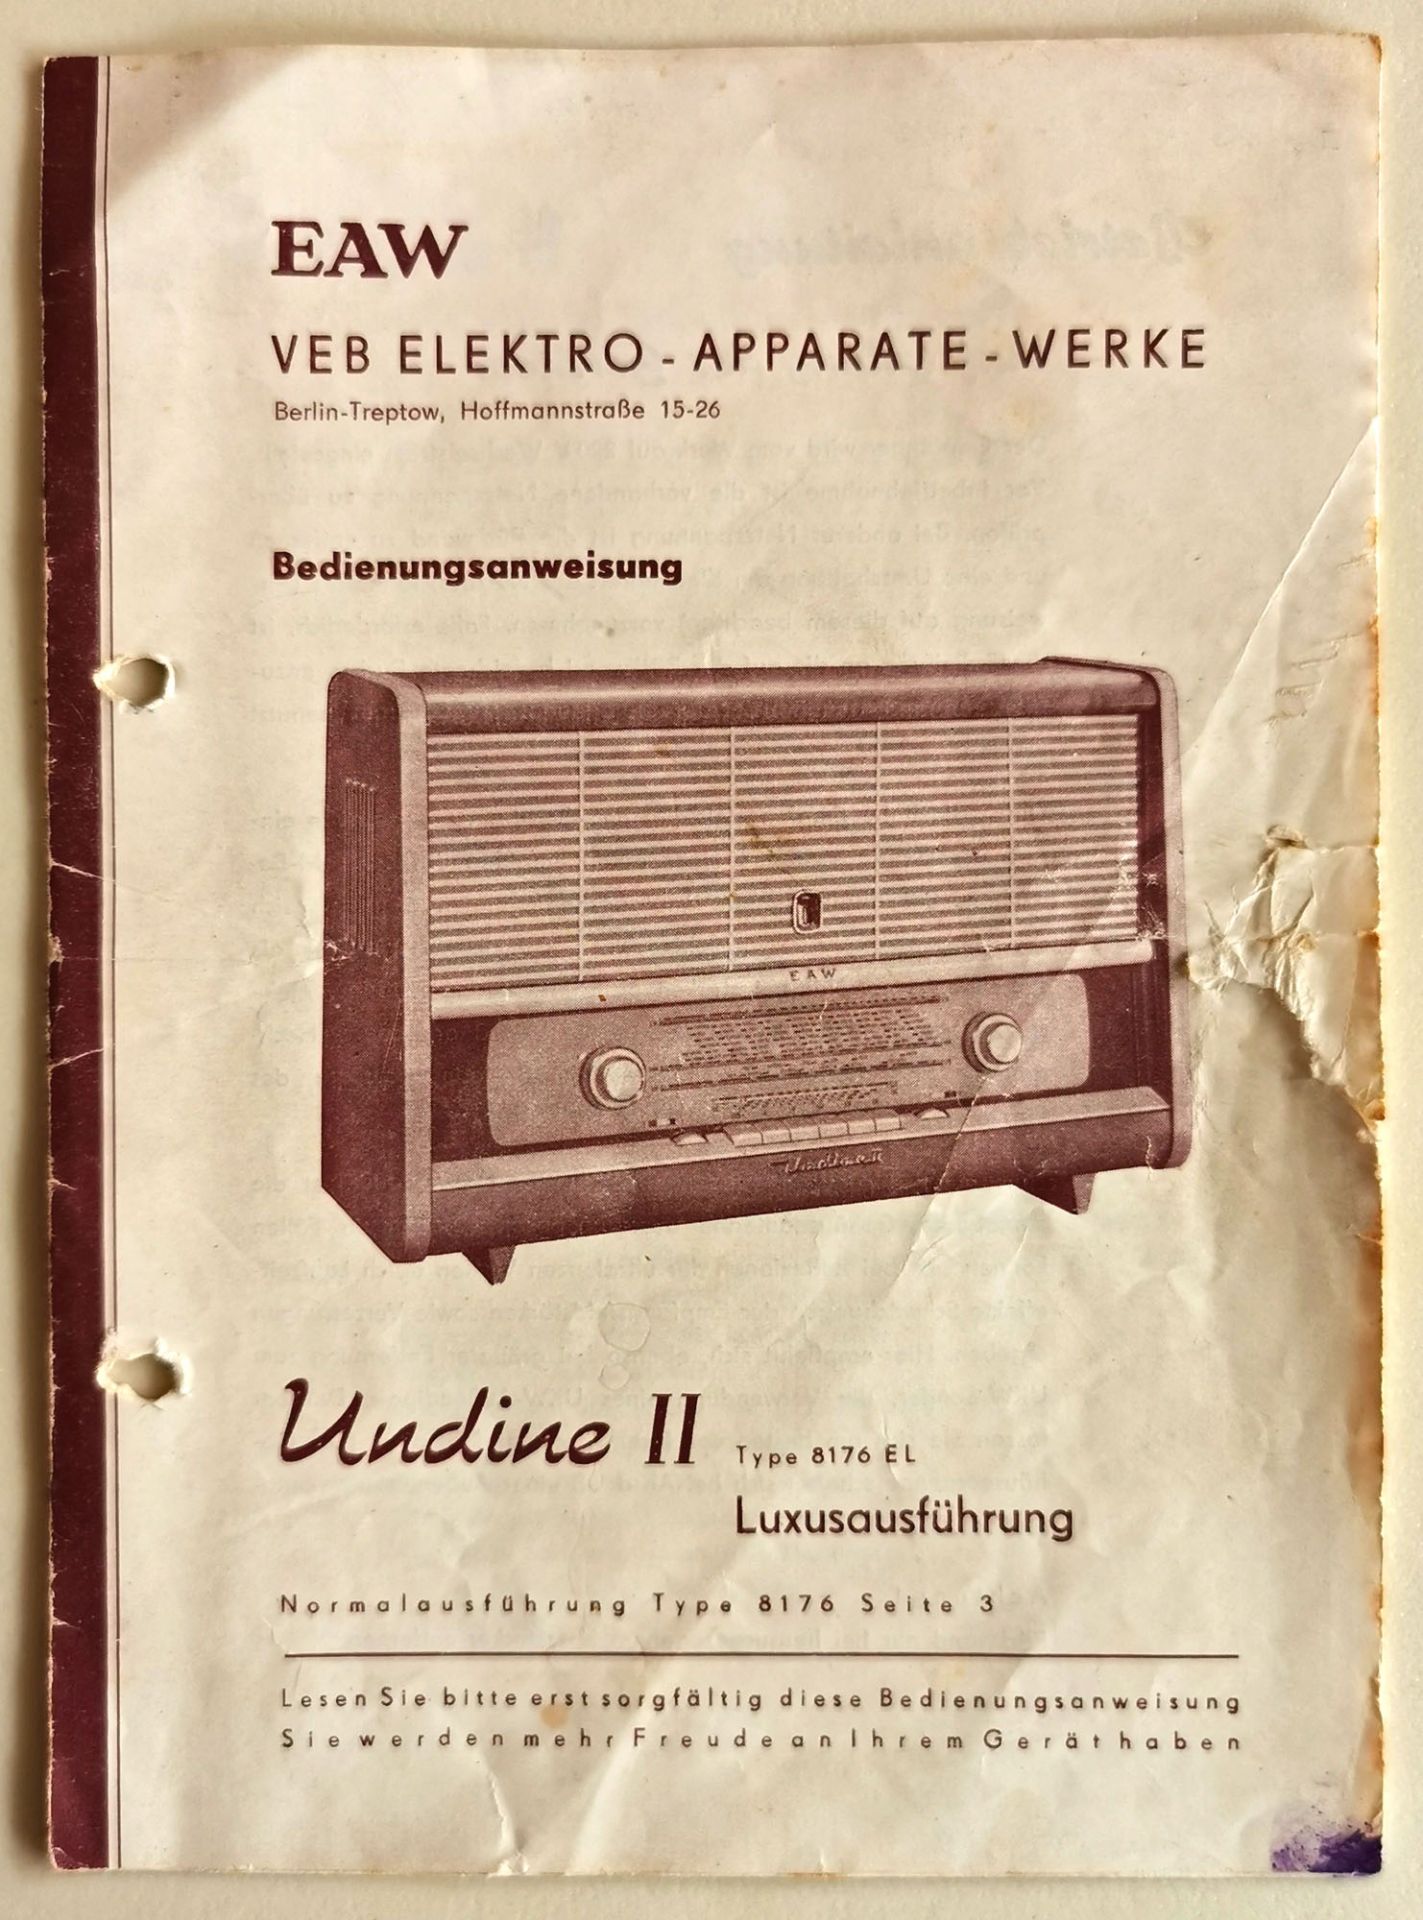 Radio EAW Undine II um 1956 - Image 8 of 9